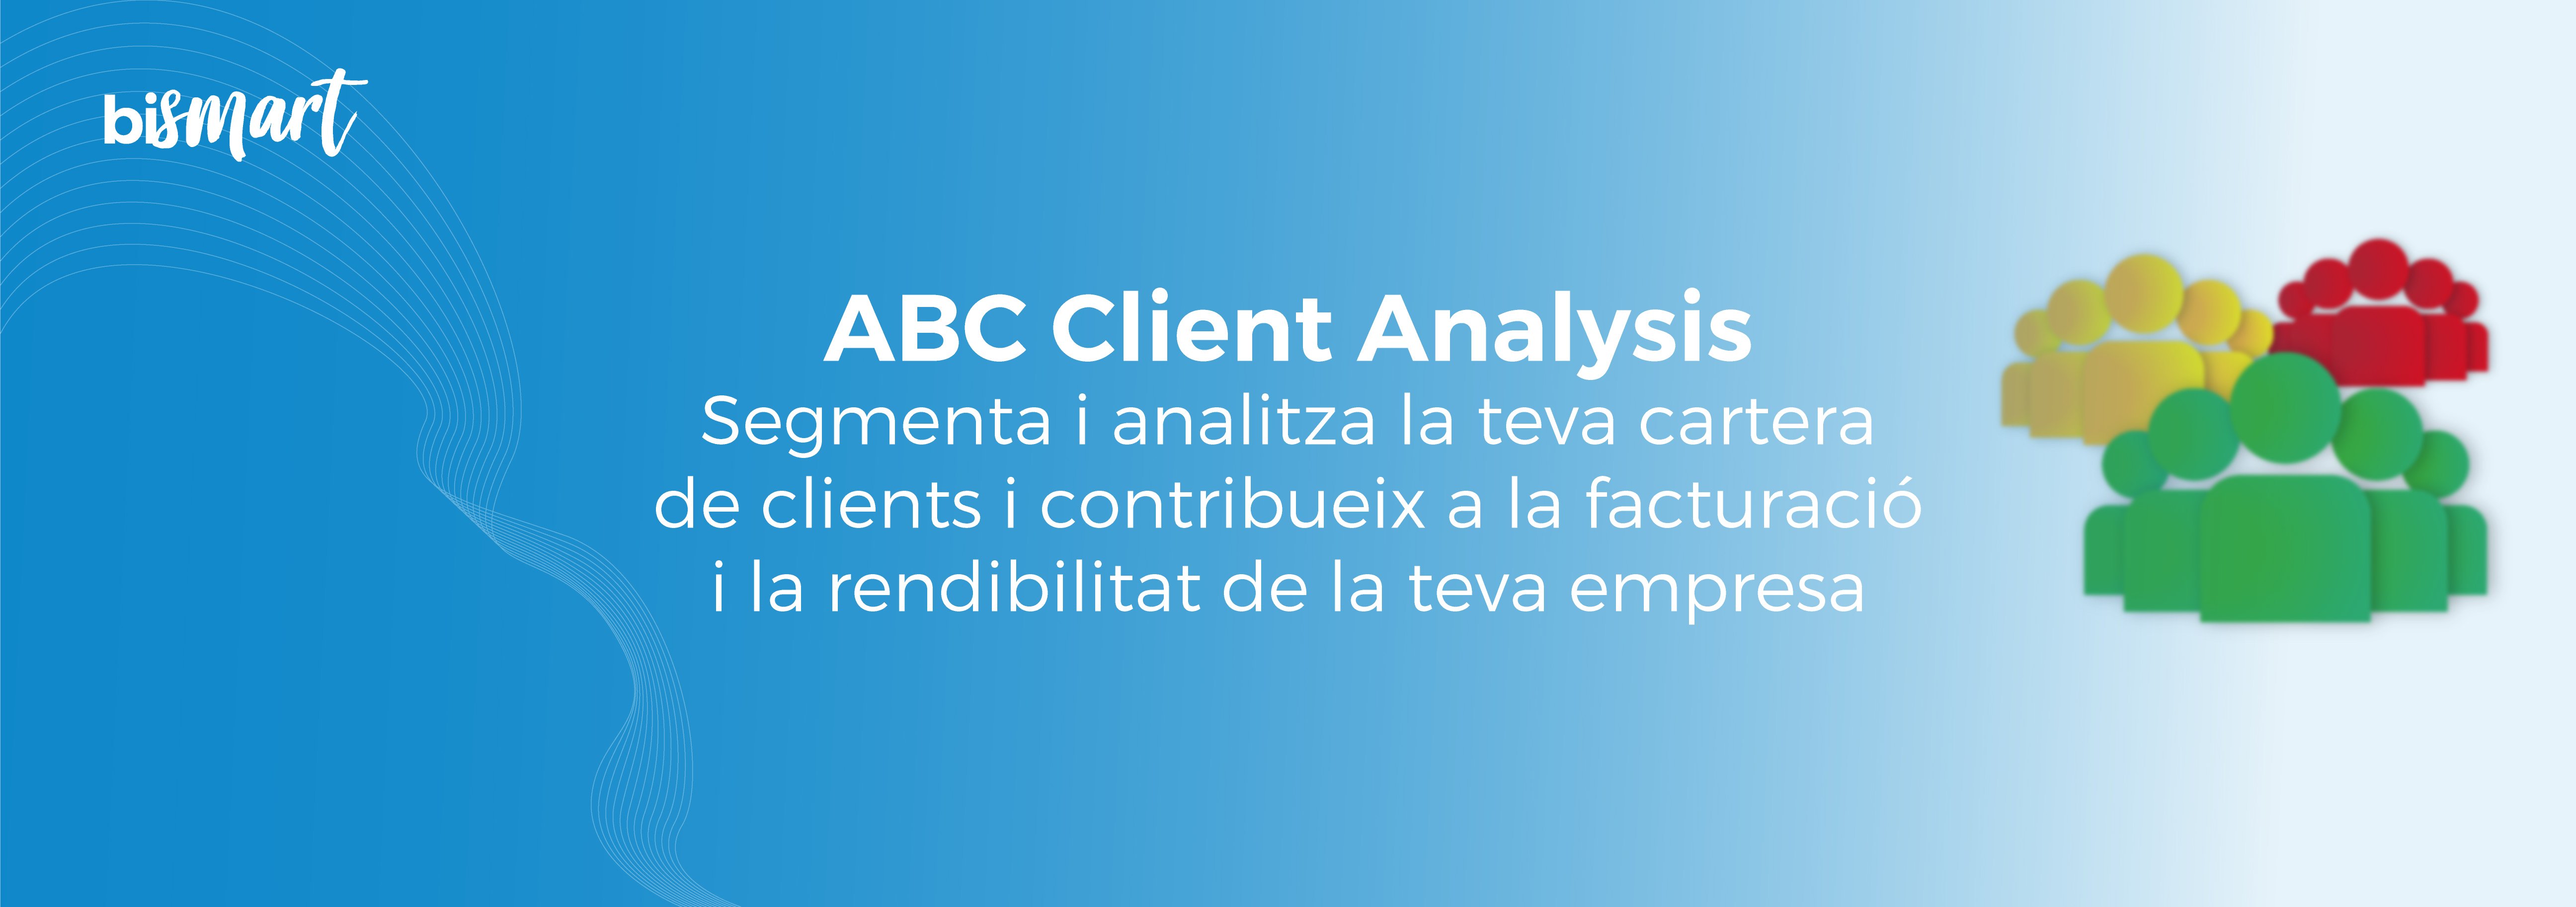 ABC-Client-Analysis-CA-01